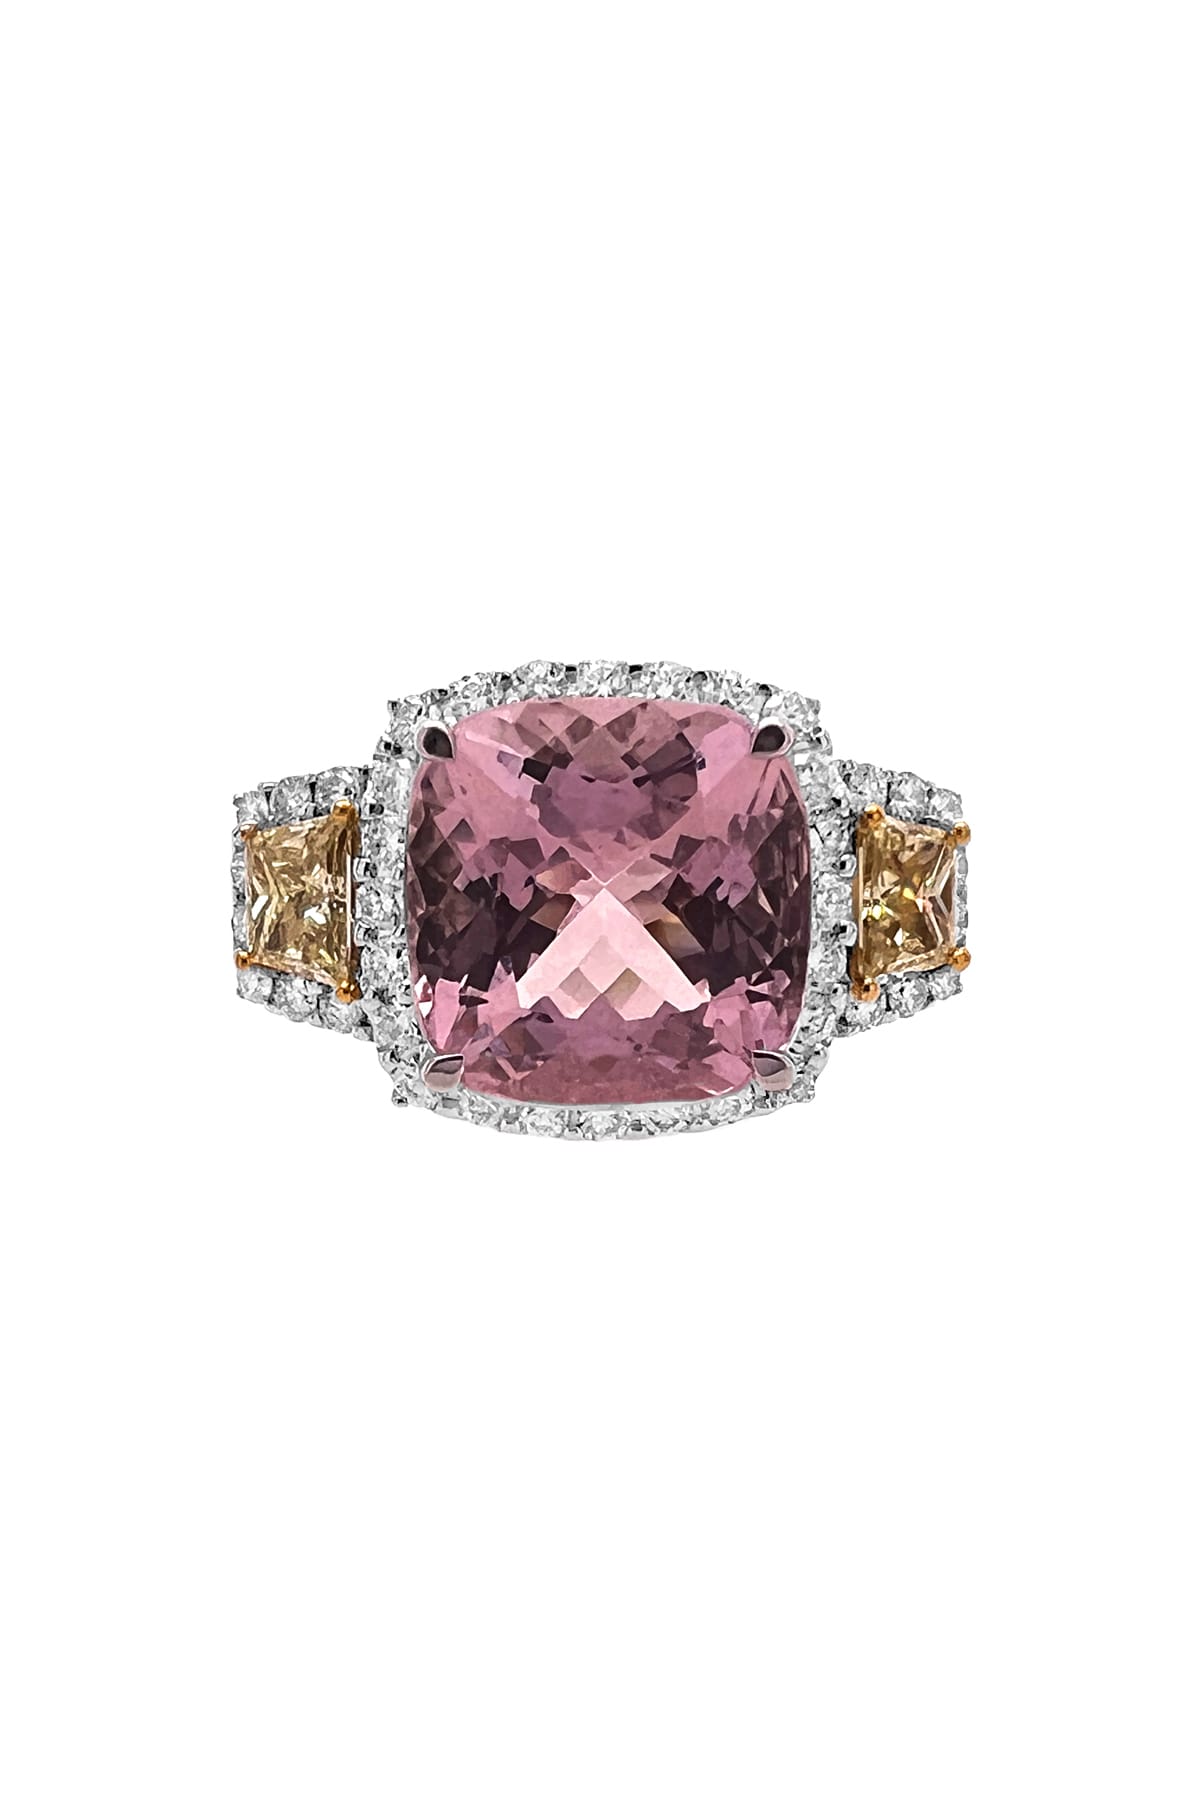 18 Carat White Gold 3.12 Carat Pink Morganite Diamond Set Ring available at LeGassick Diamonds and Jewellery Gold Coast, Australia.